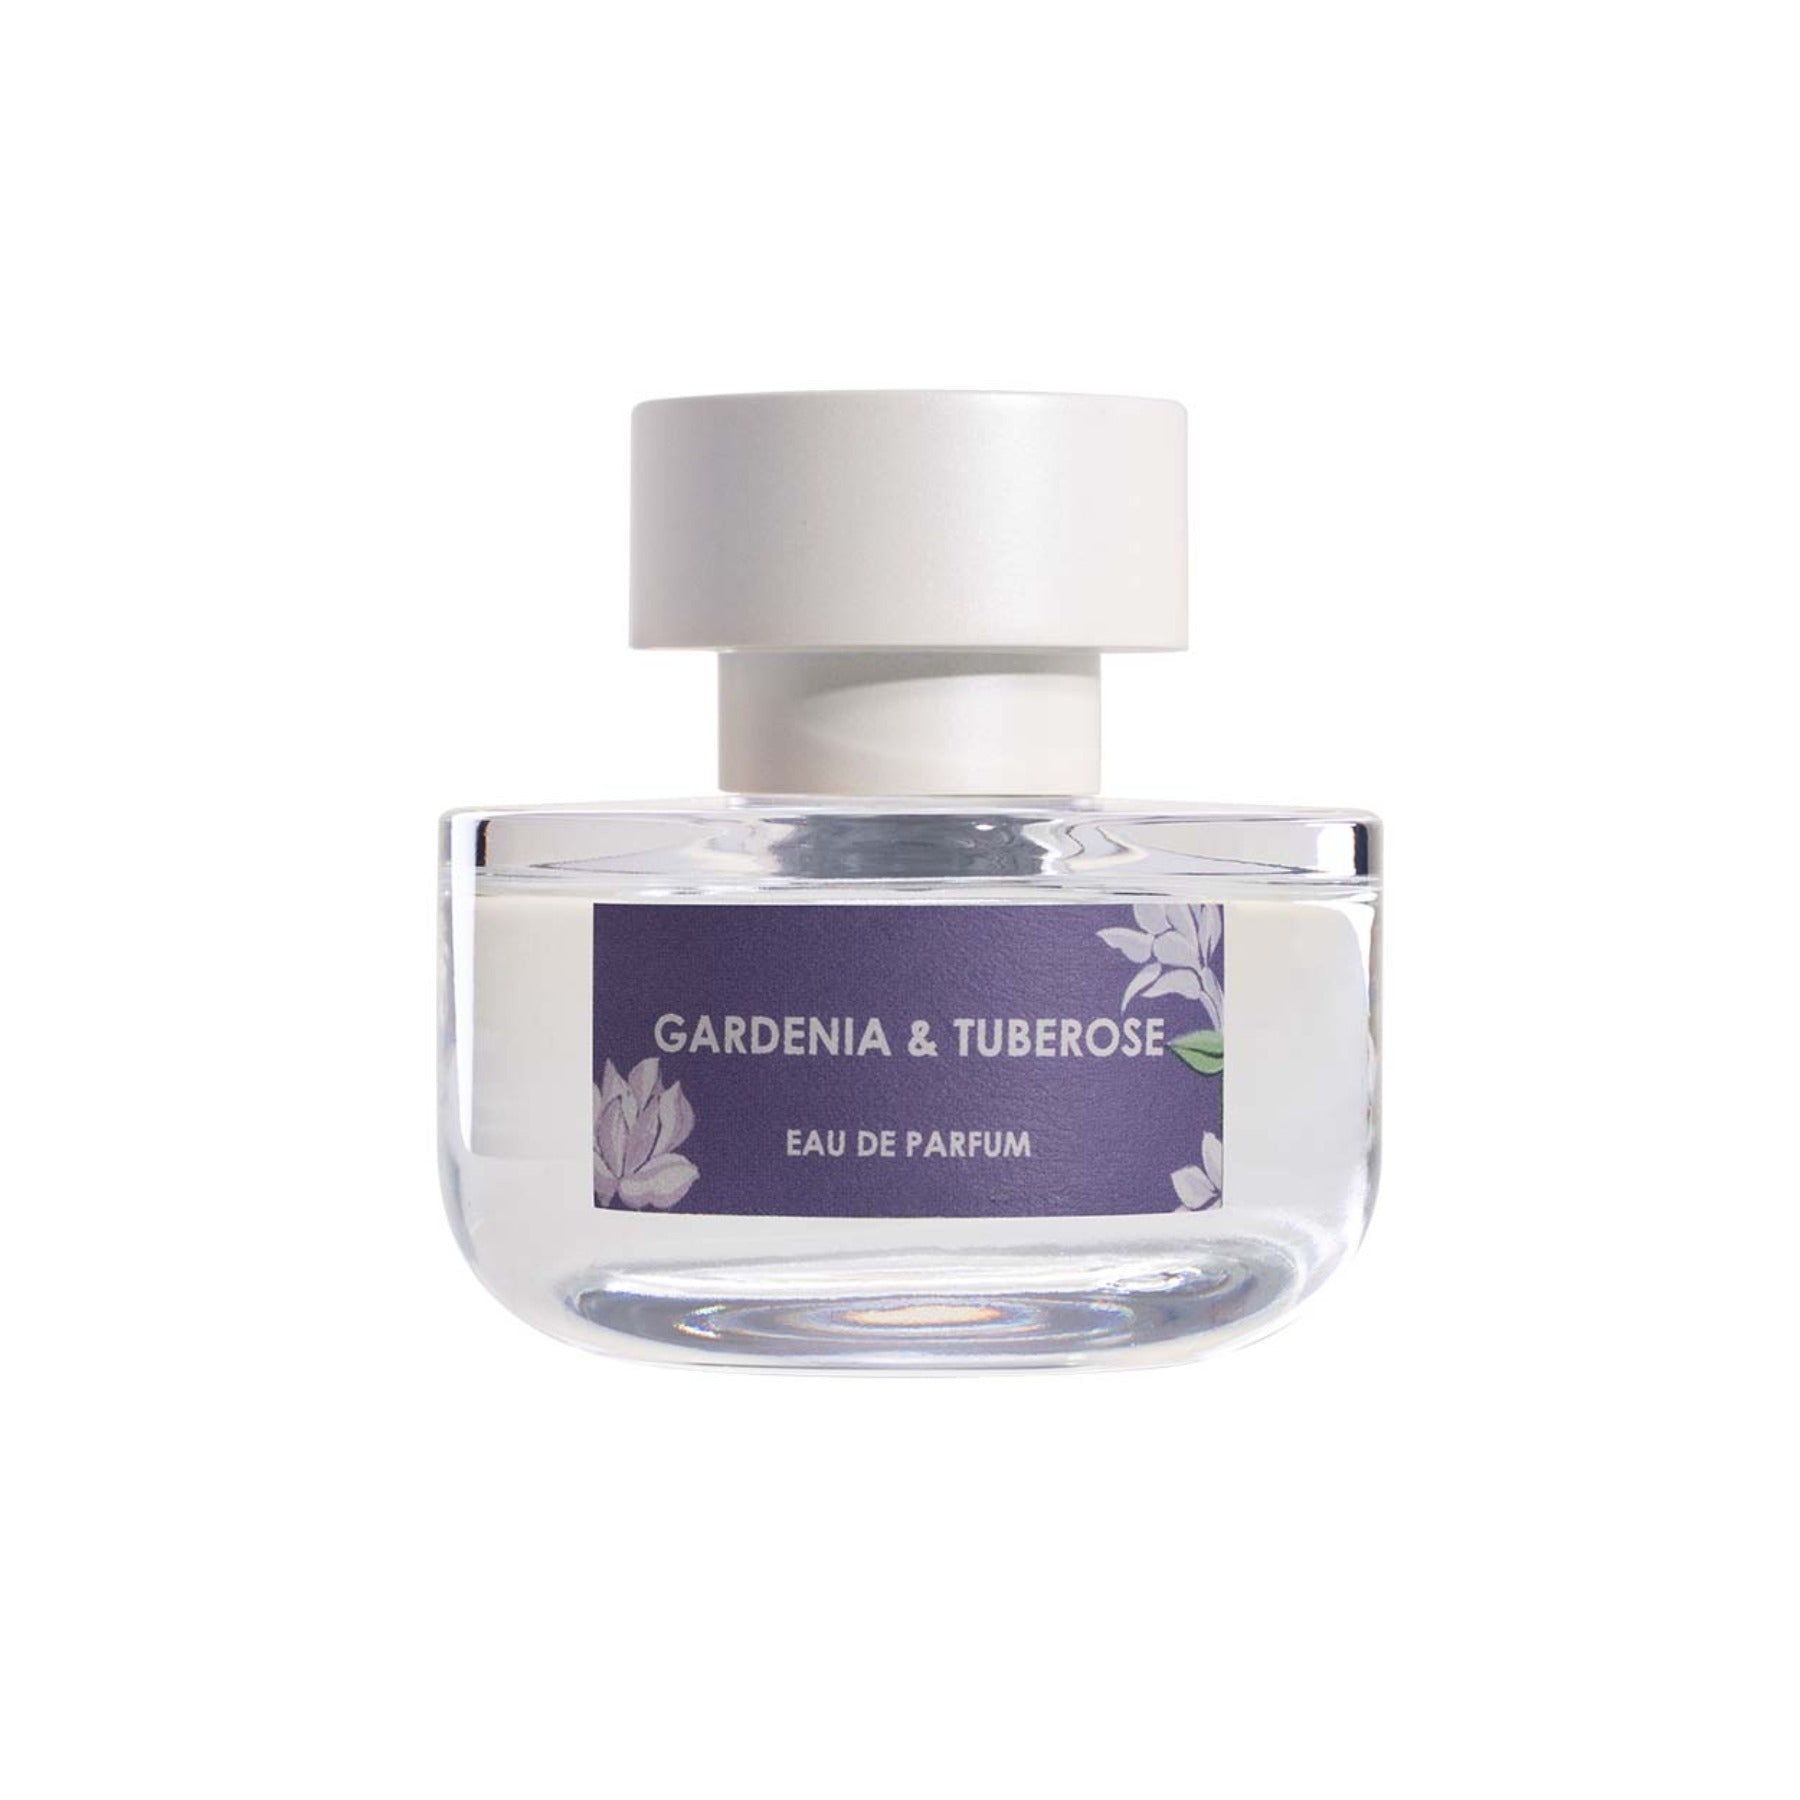 Eau de Parfum - Gardenia & Tuberose by elvis+elvin at MEiiYO